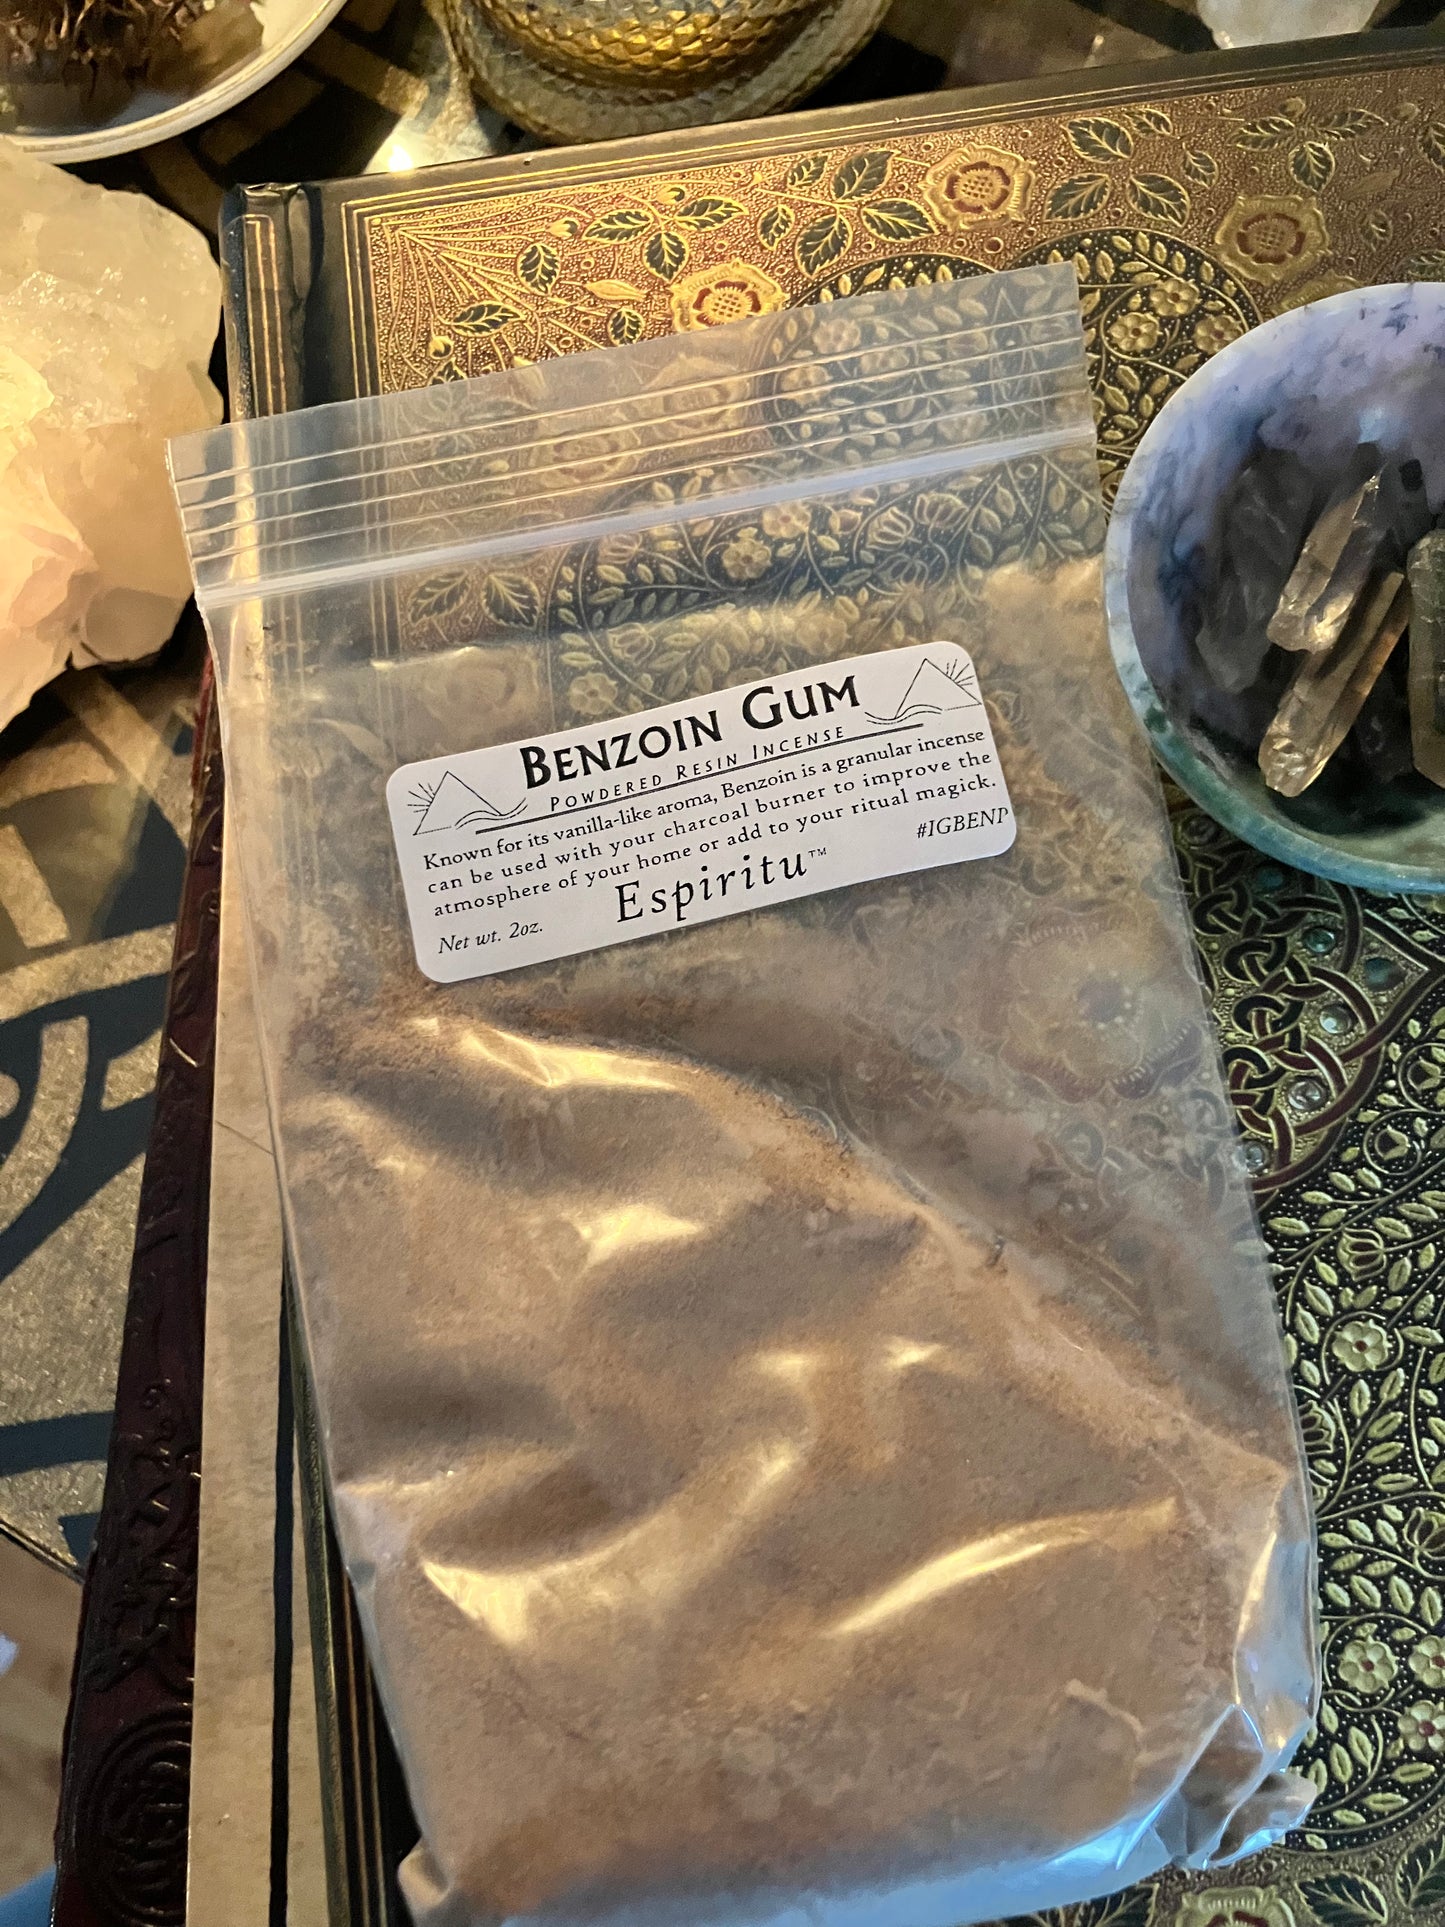 Benzoin Gum powder incense 2 oz